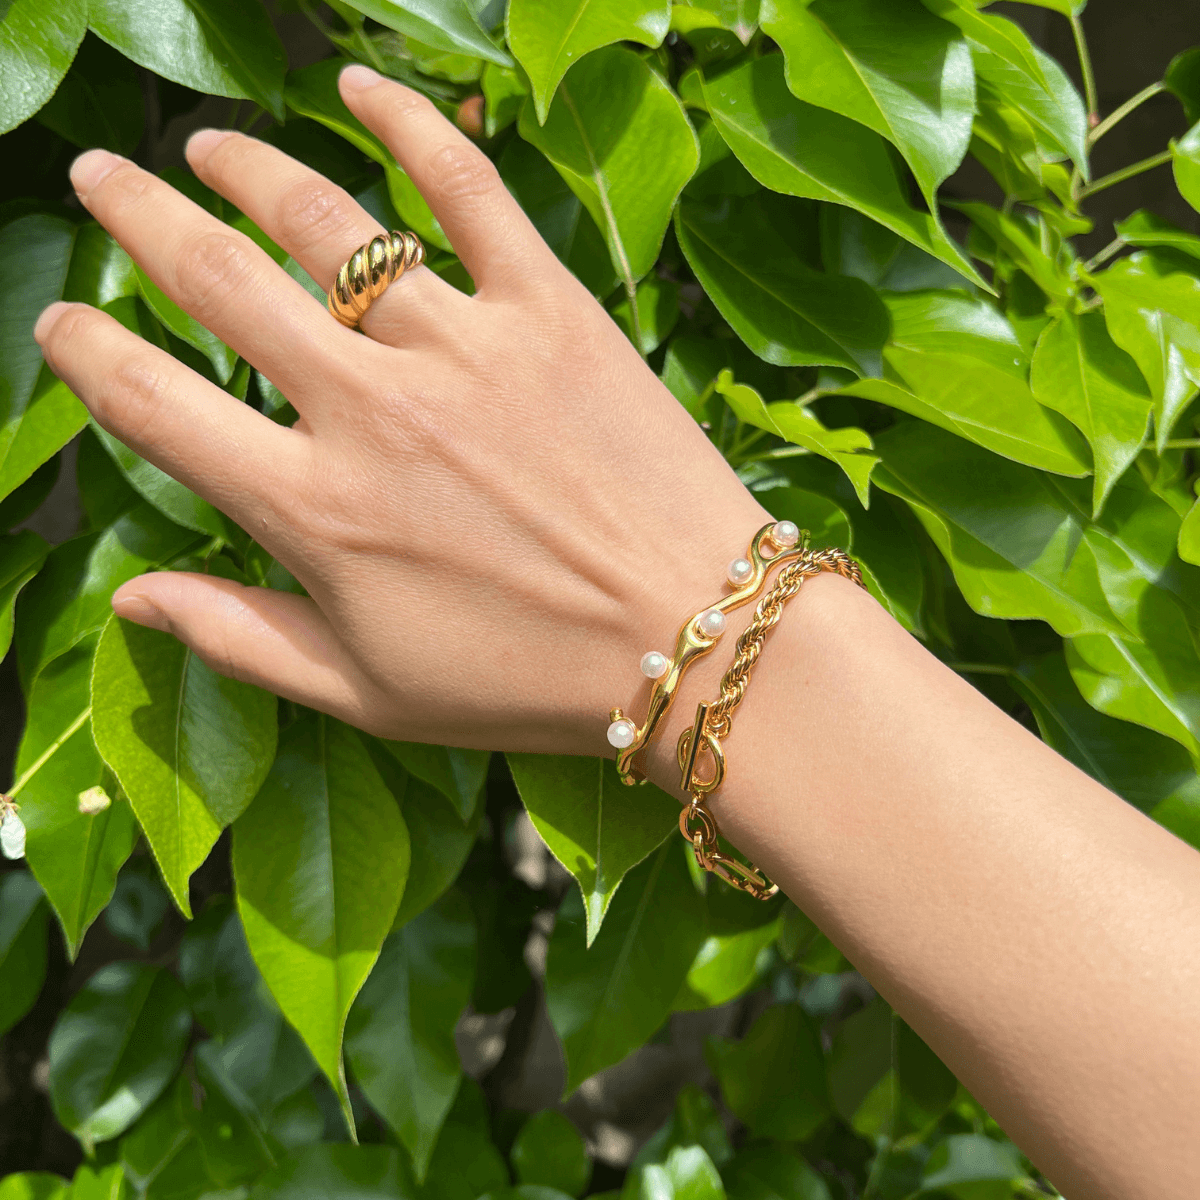 1 BEST Gold Chain Bracelet Jewelry Gift for Women